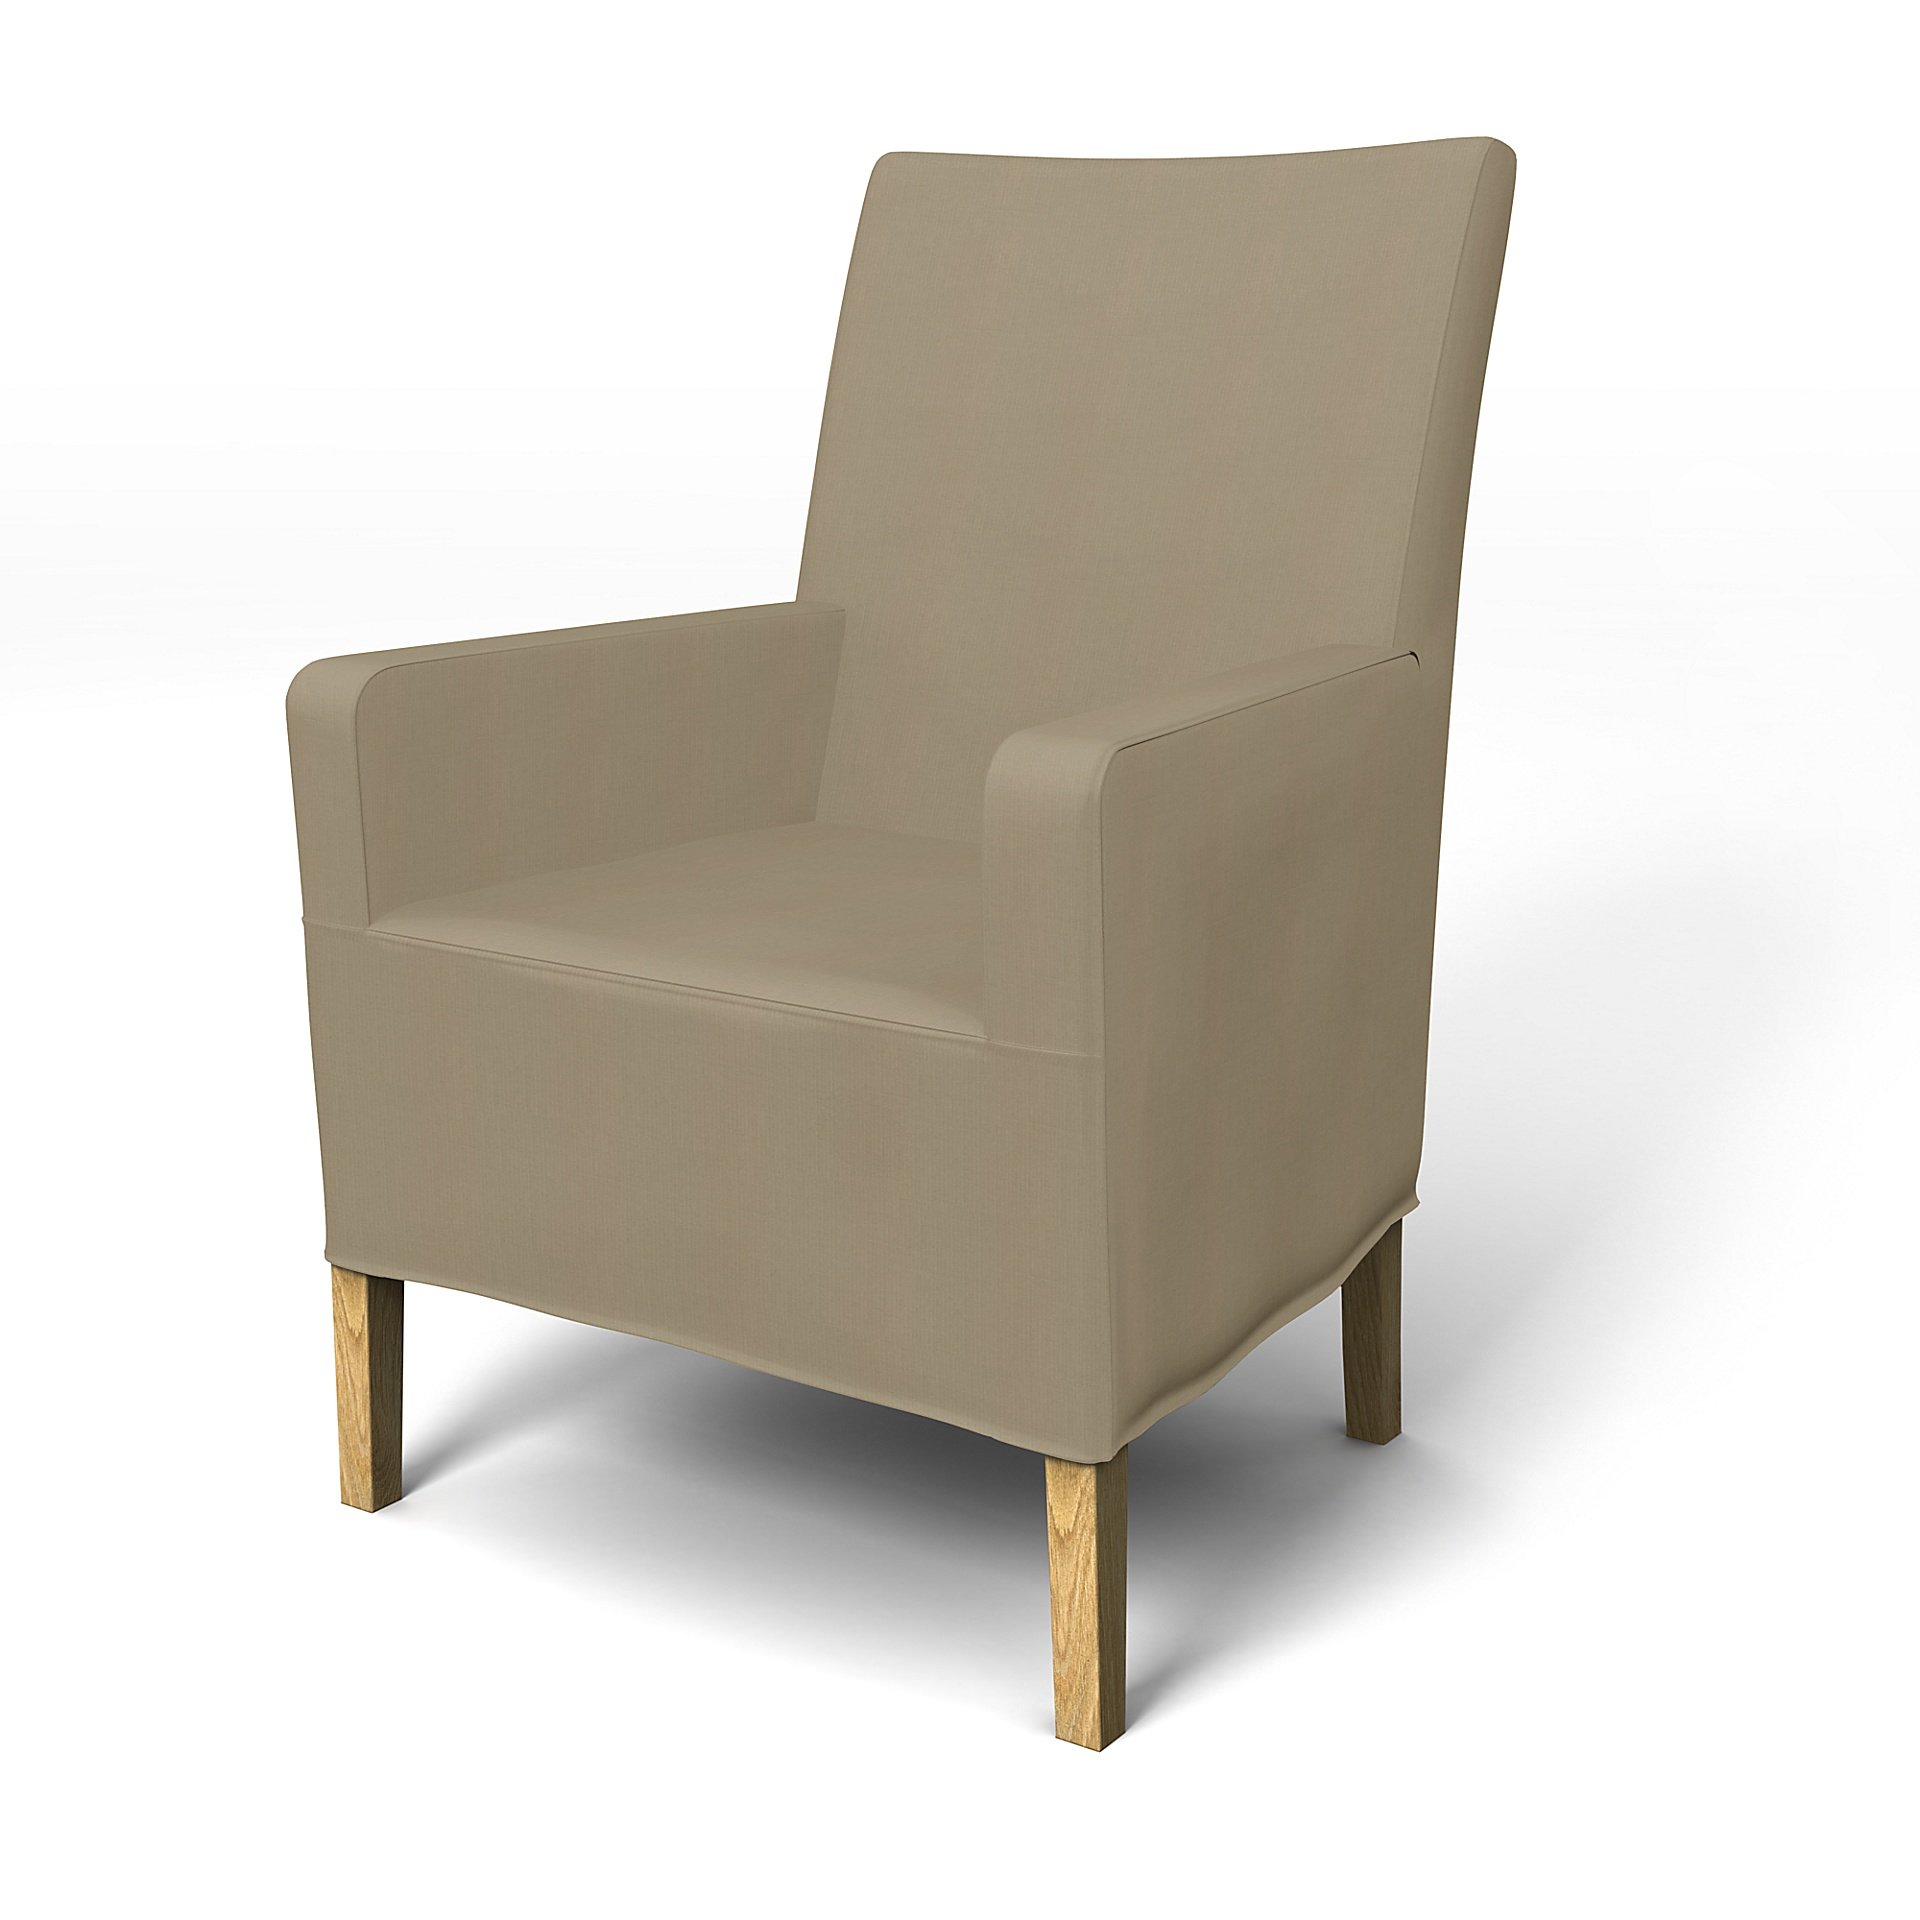 IKEA - Henriksdal, Chair cover w/ armrest, medium length skirt, Dark Sand, Outdoor - Bemz